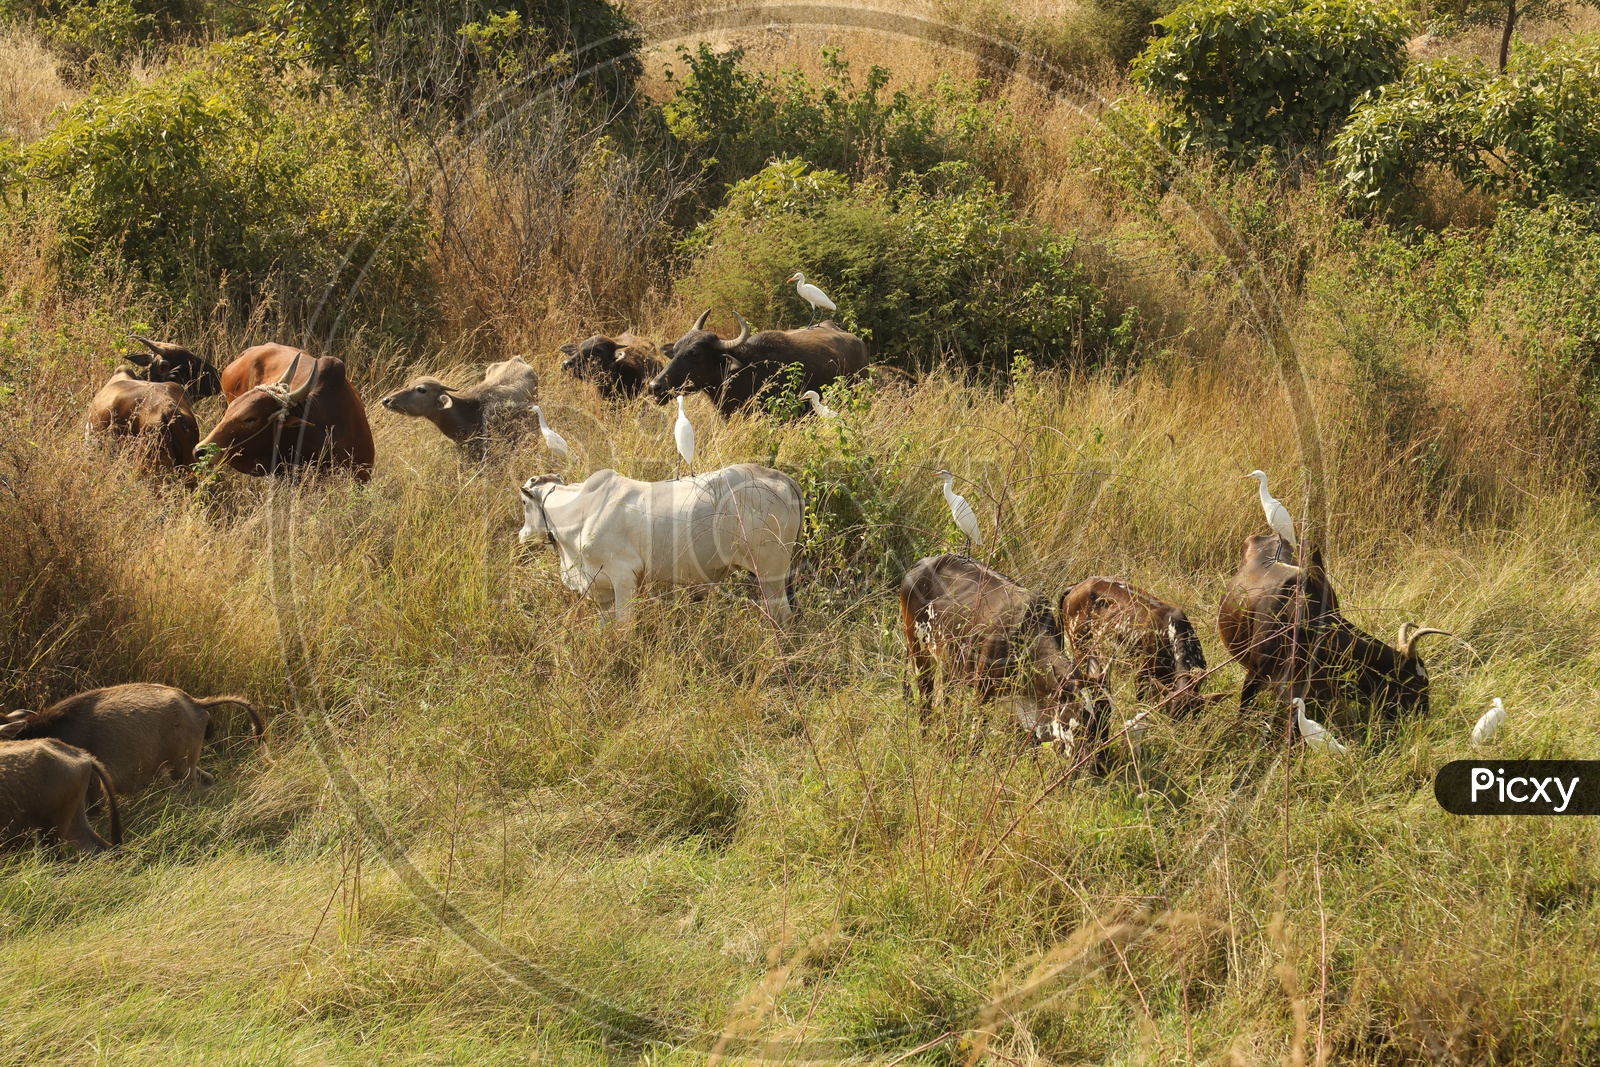 Cattle grazing in the meadow